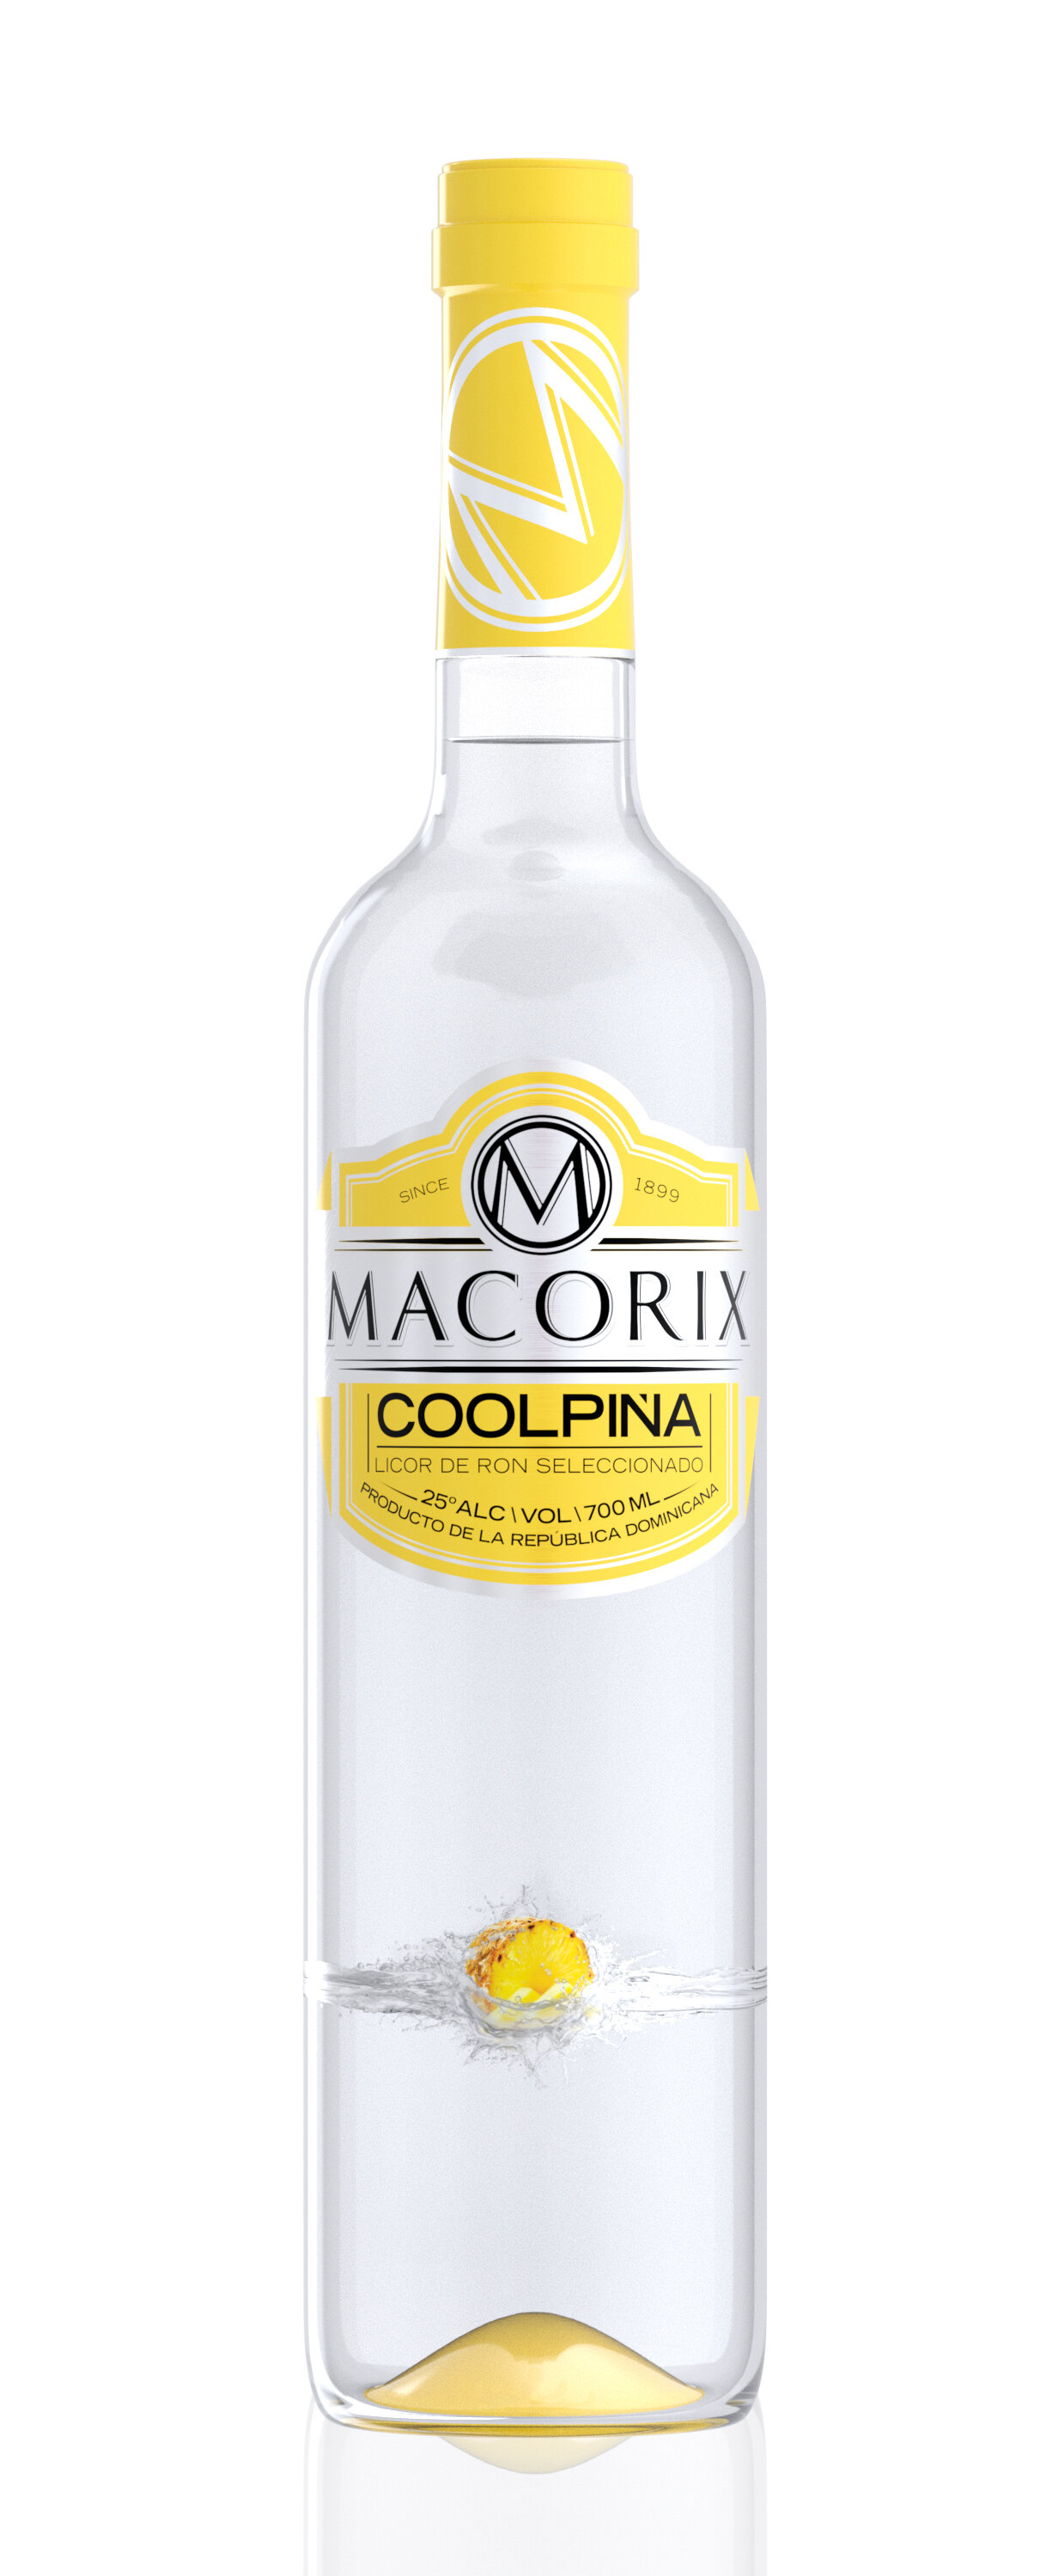 Macorix Coolpiña.jpg